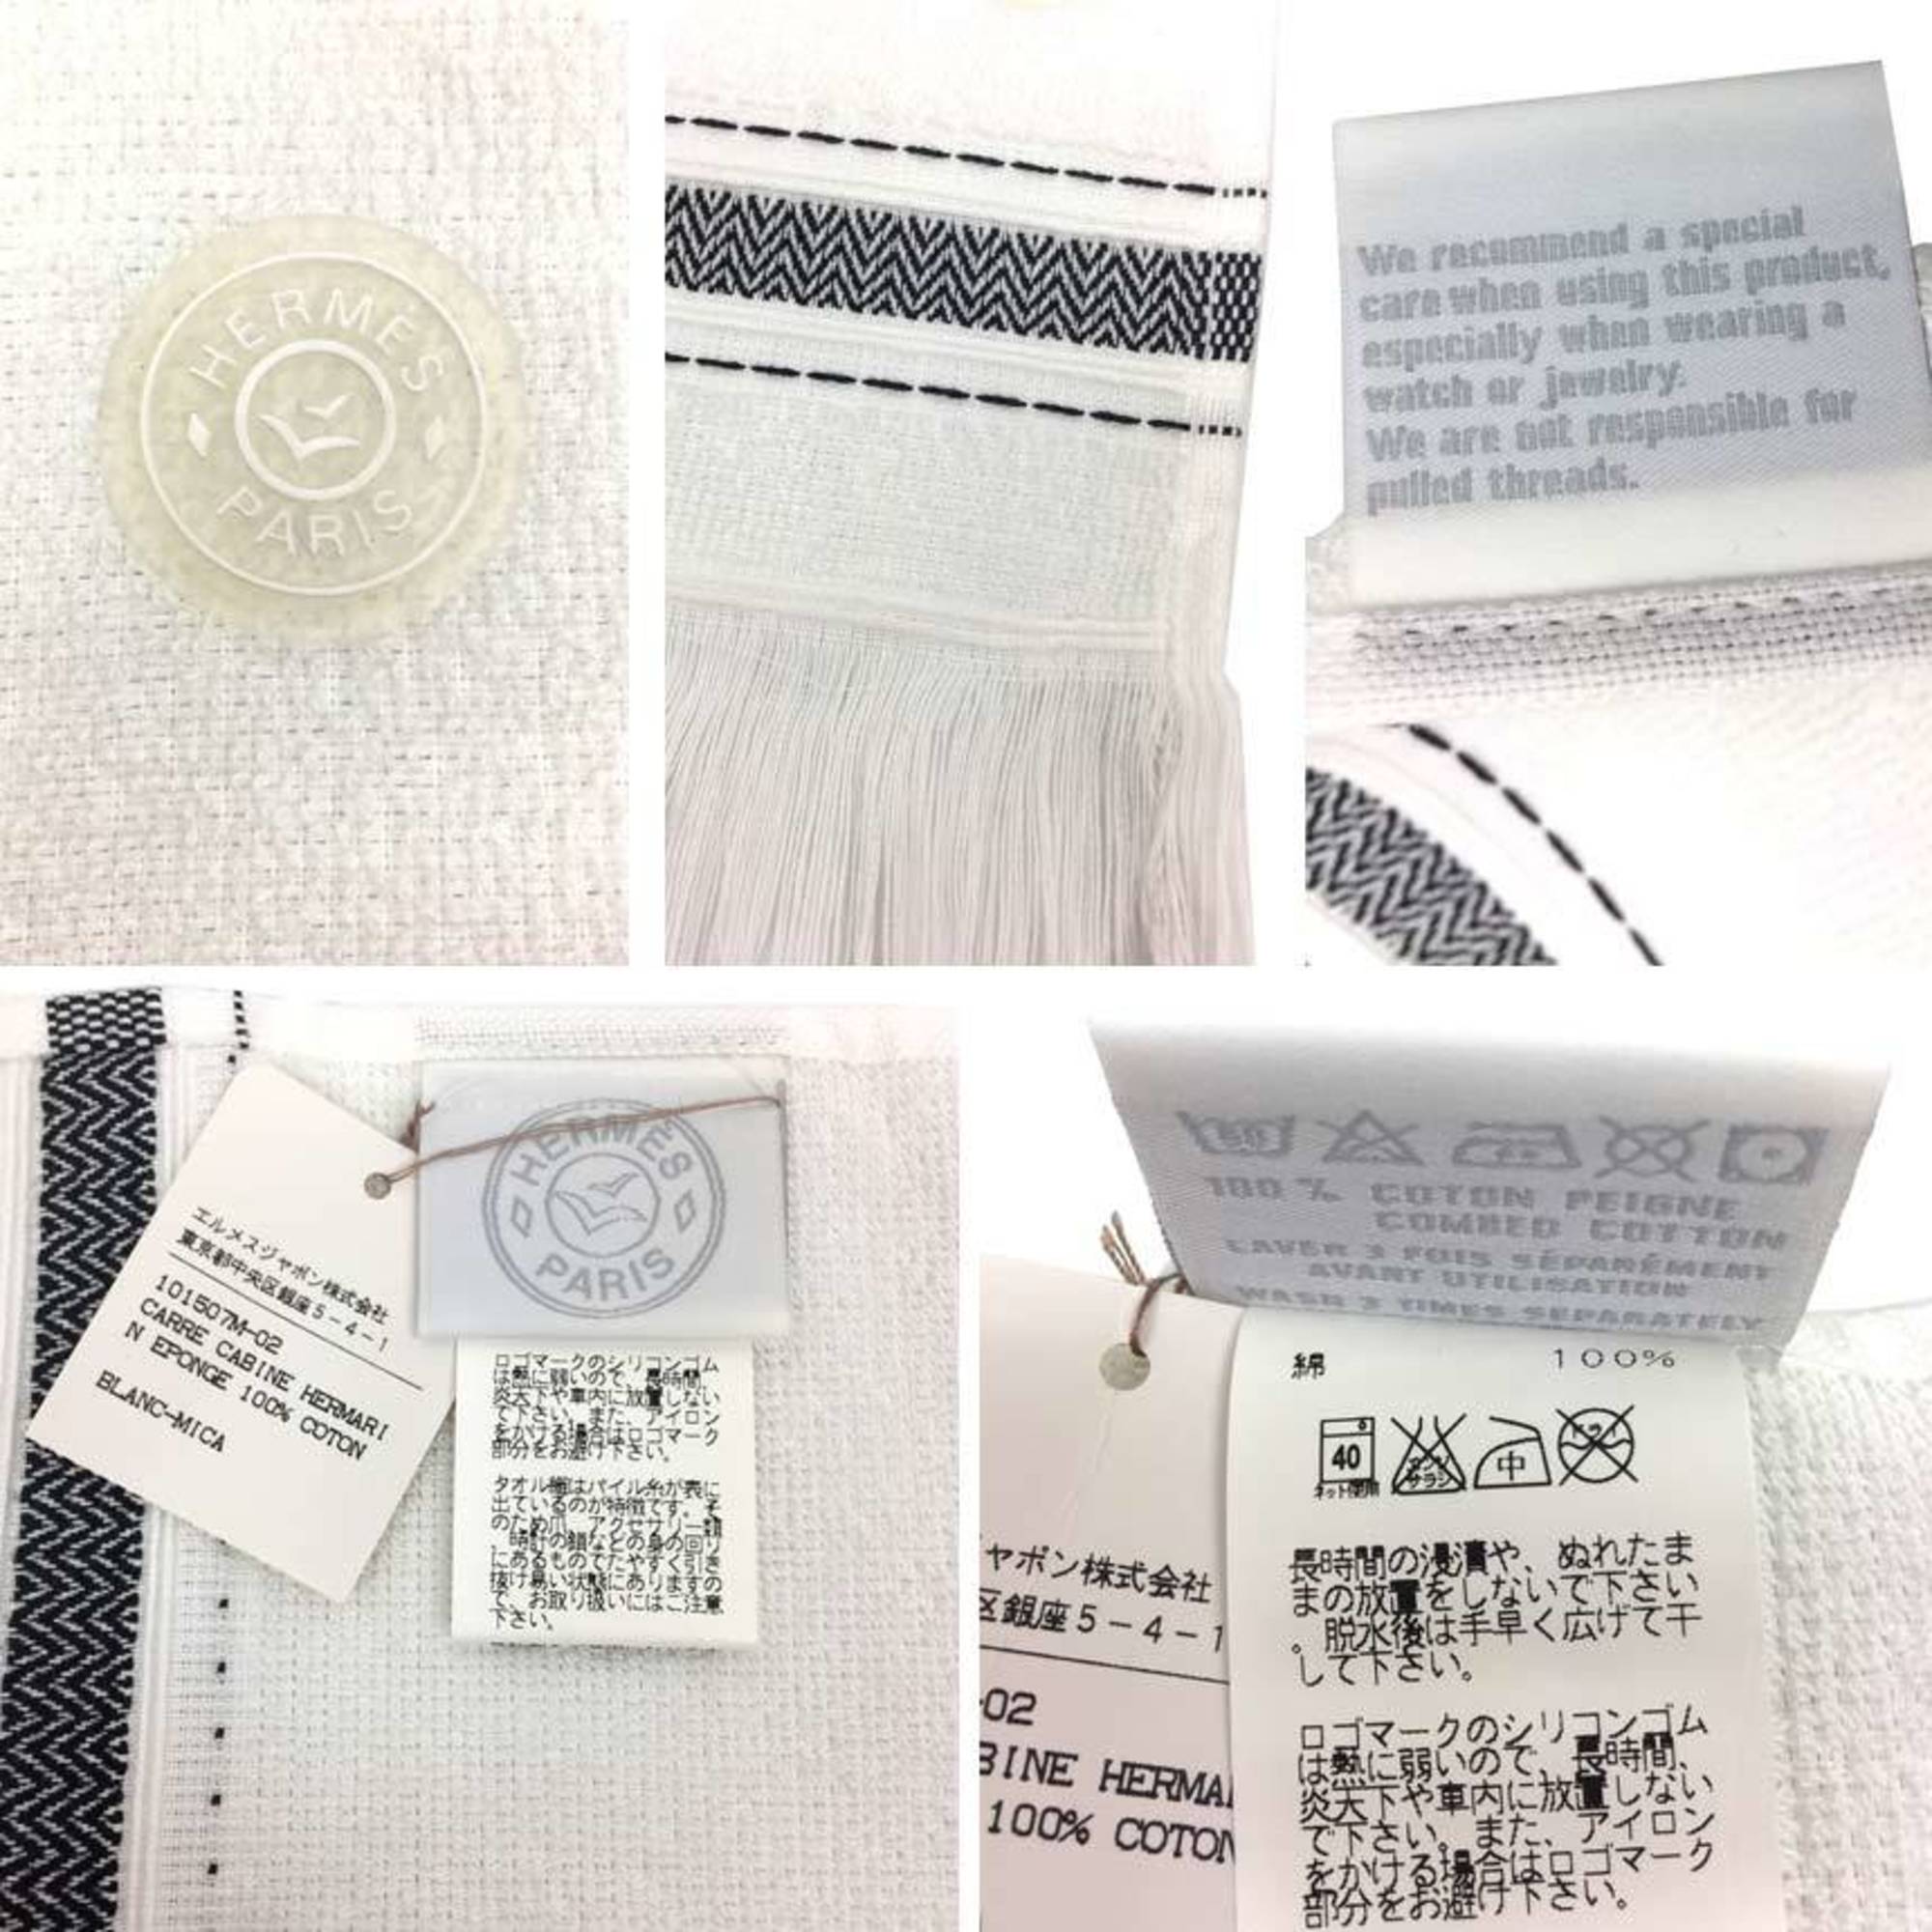 HERMES Hand Towel Handkerchief CARRE CABINE HERMARIN EPONGE Cotton BLANC/MICA White Men Women Unisex